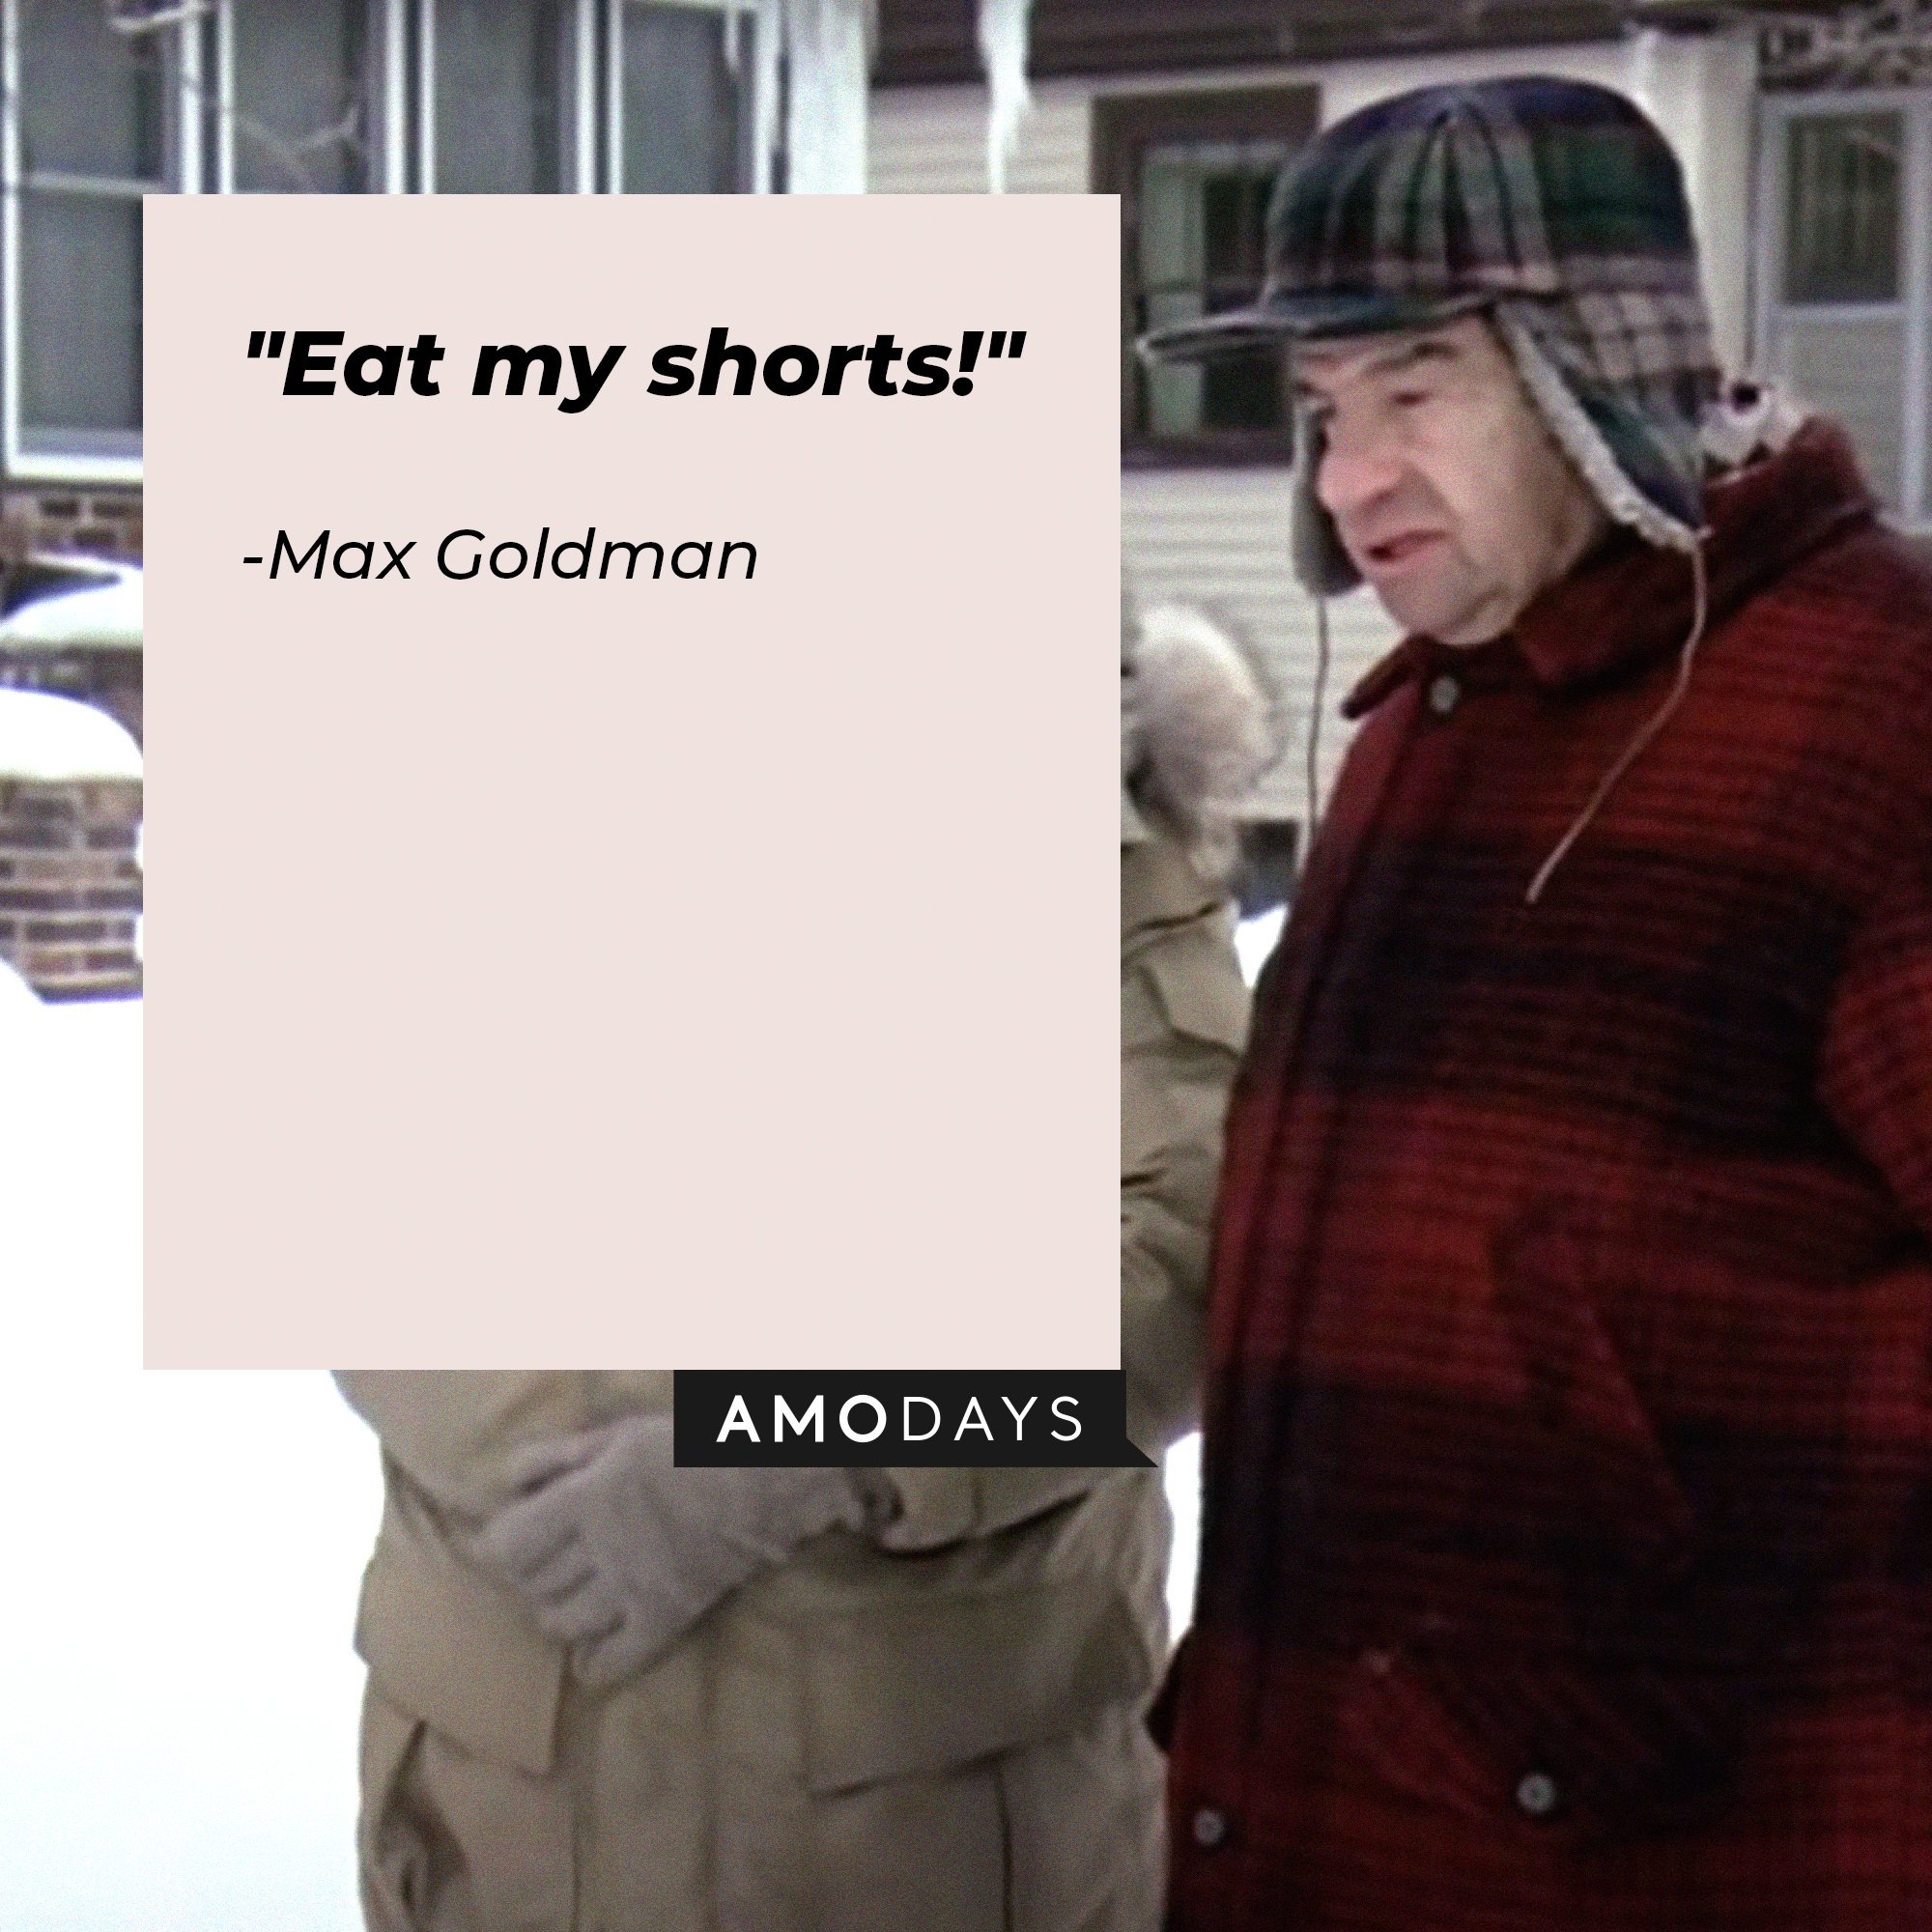 Max Goldman’s quote: "Eat my shorts!" | Image: AmoDays